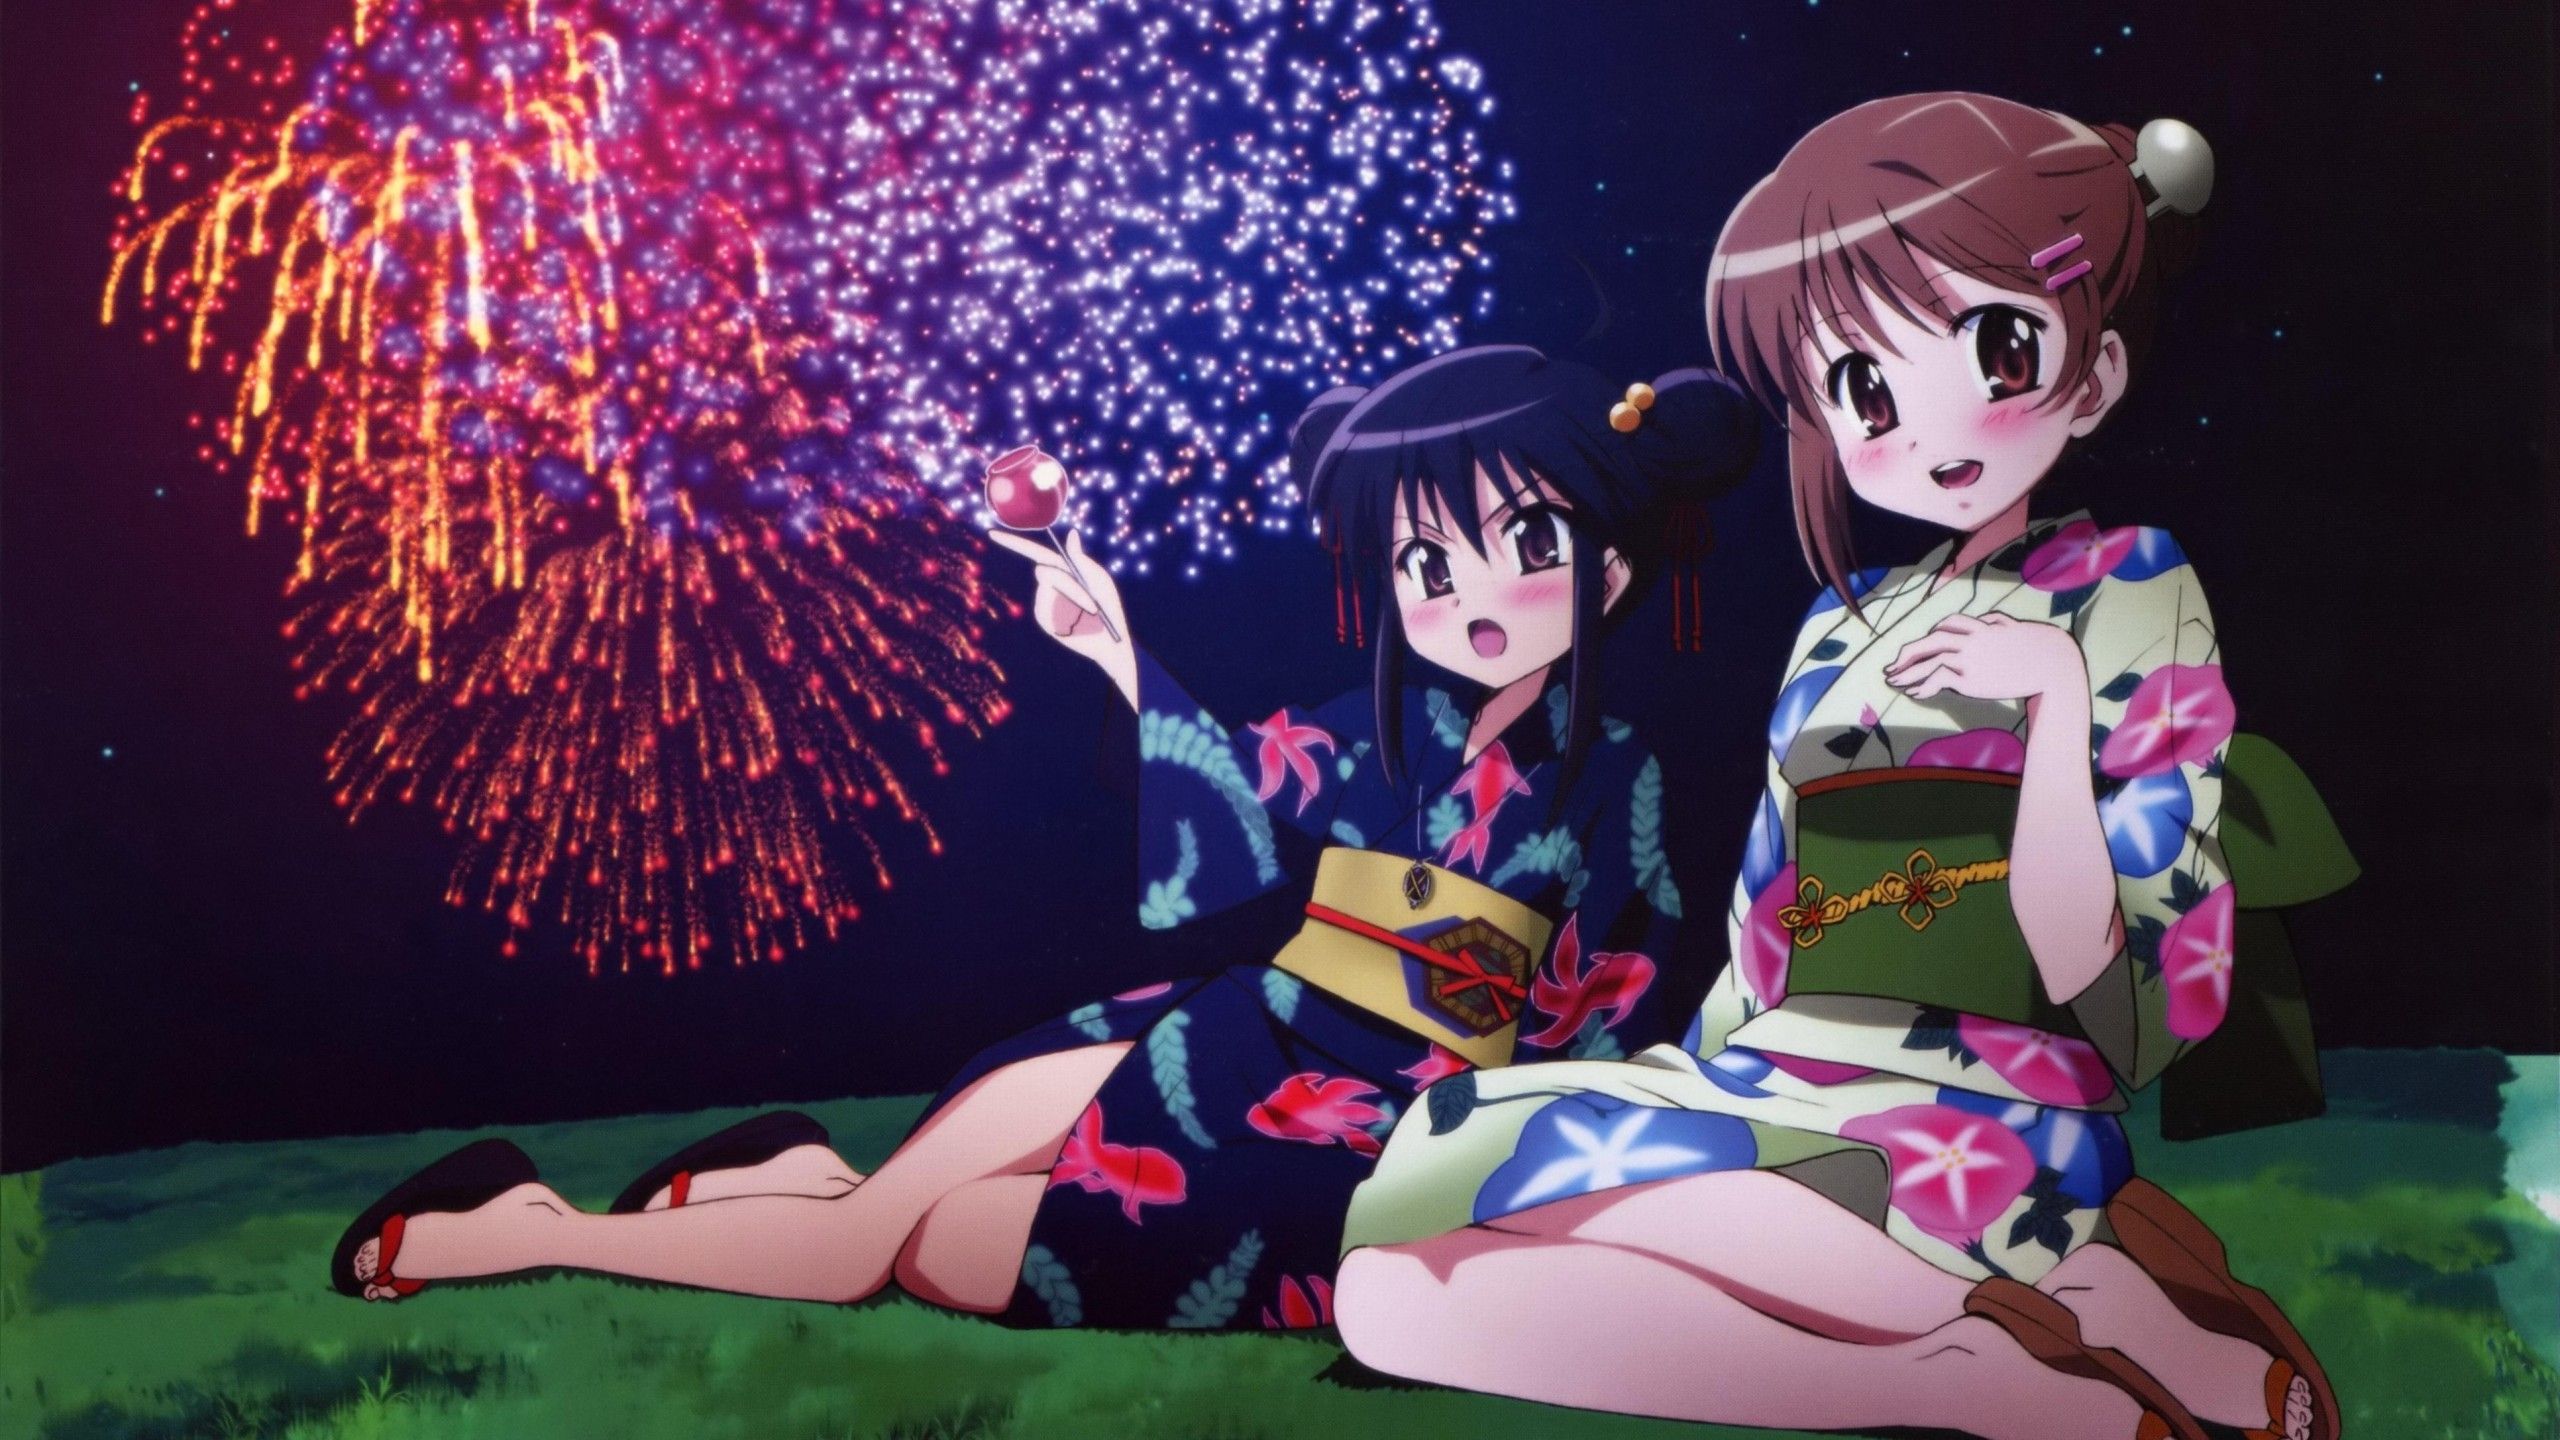 Download 2560x1440 Shakugan No Shana, Festival, Fireworks, Kimono, Anime Girl Wallpaper for iMac 27 inch